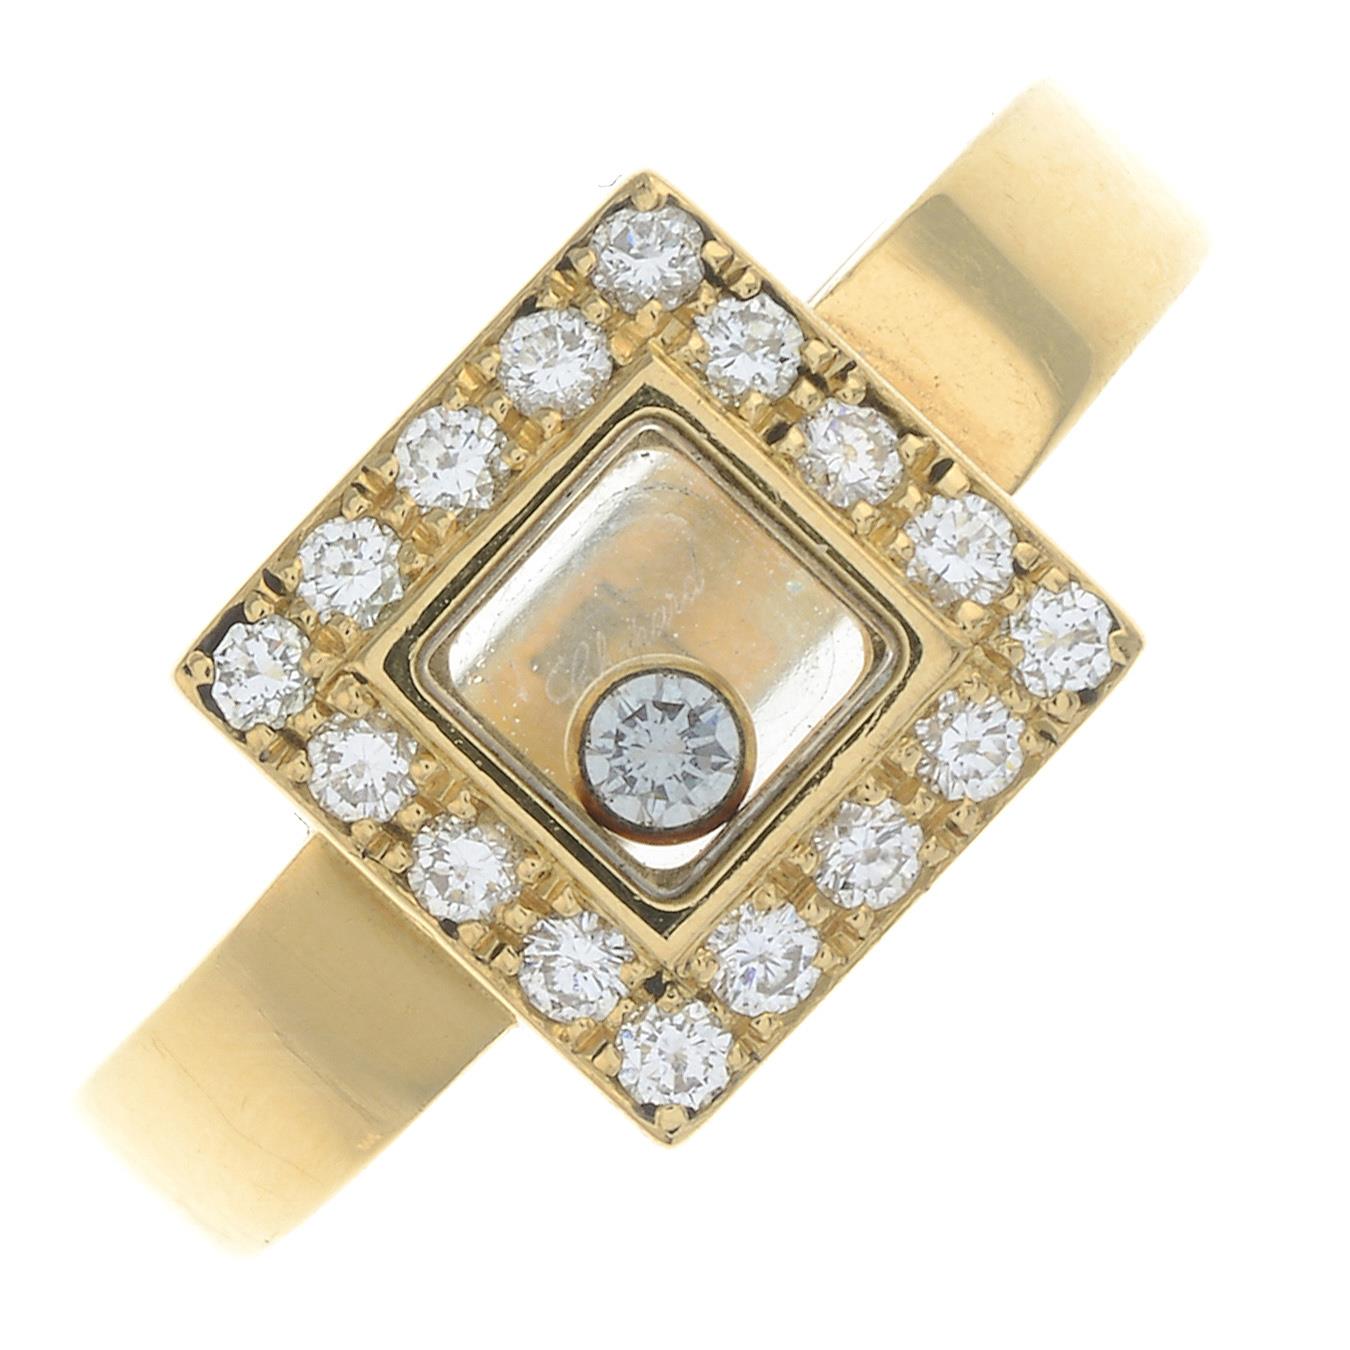 A brilliant-cut diamond 'Happy Diamonds' ring, by Chopard.